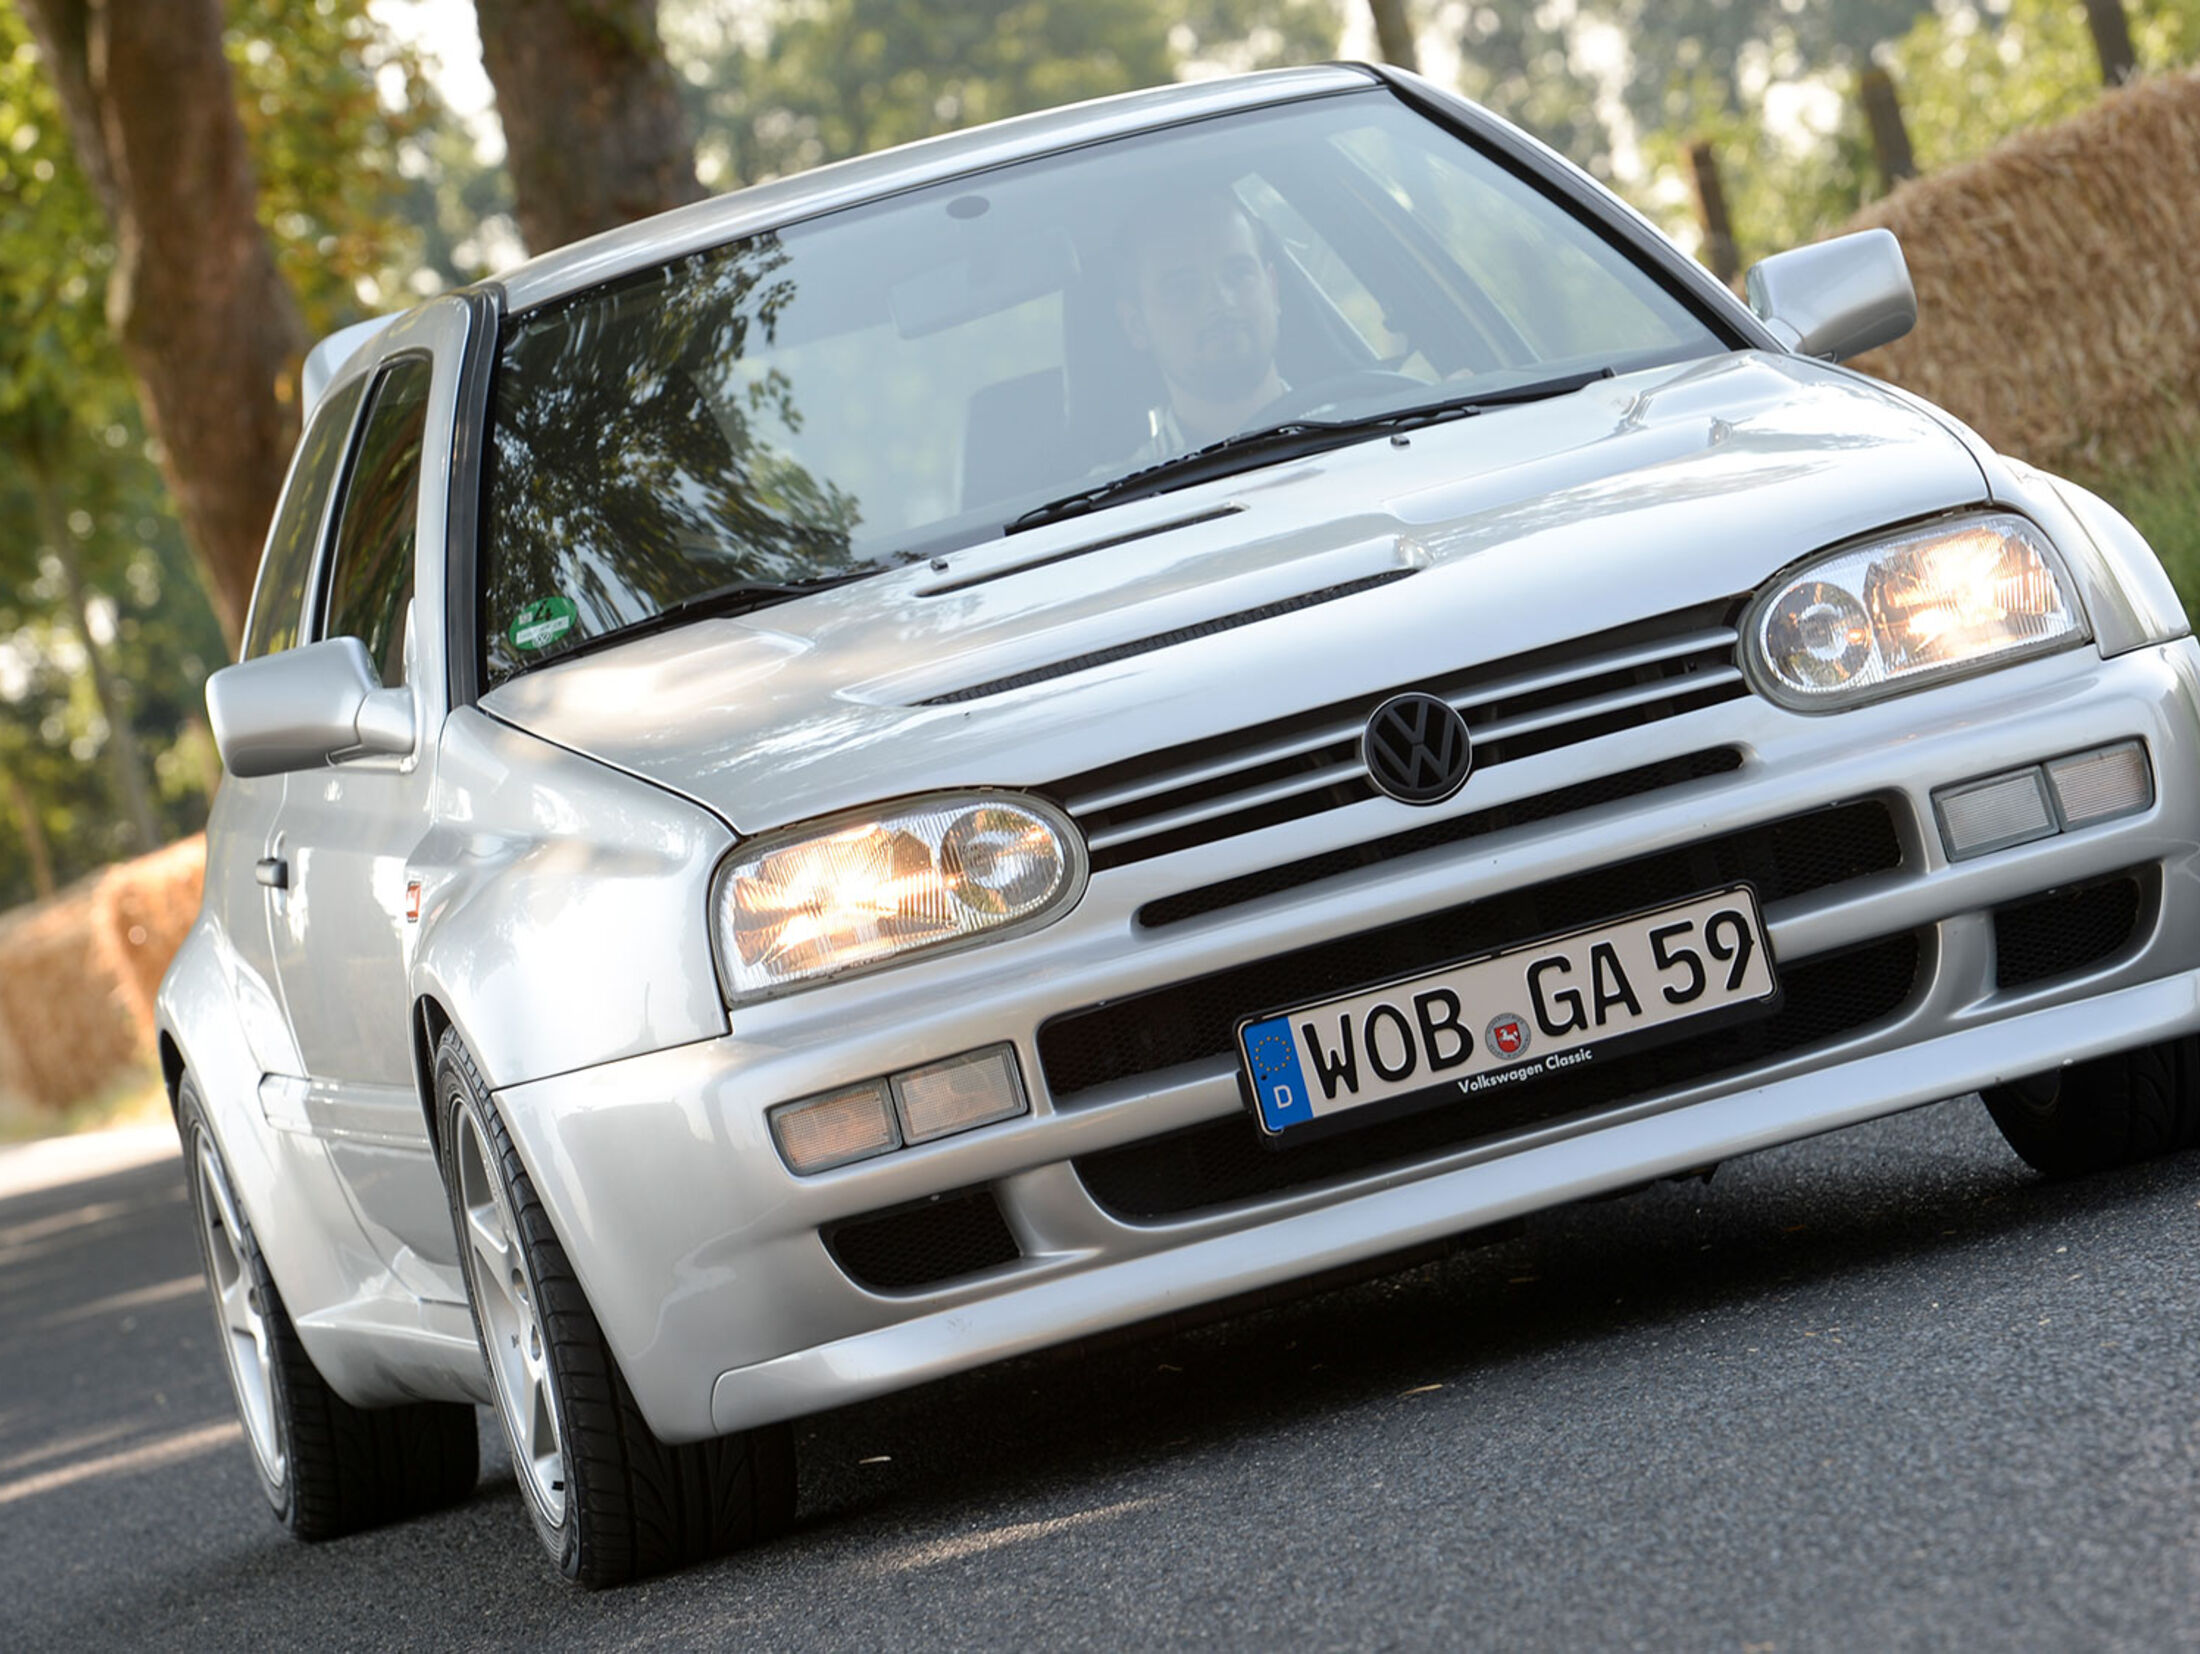 Verkauft VW Golf III Tuning Rot, gebraucht 1994, 60.000 km in Hausen